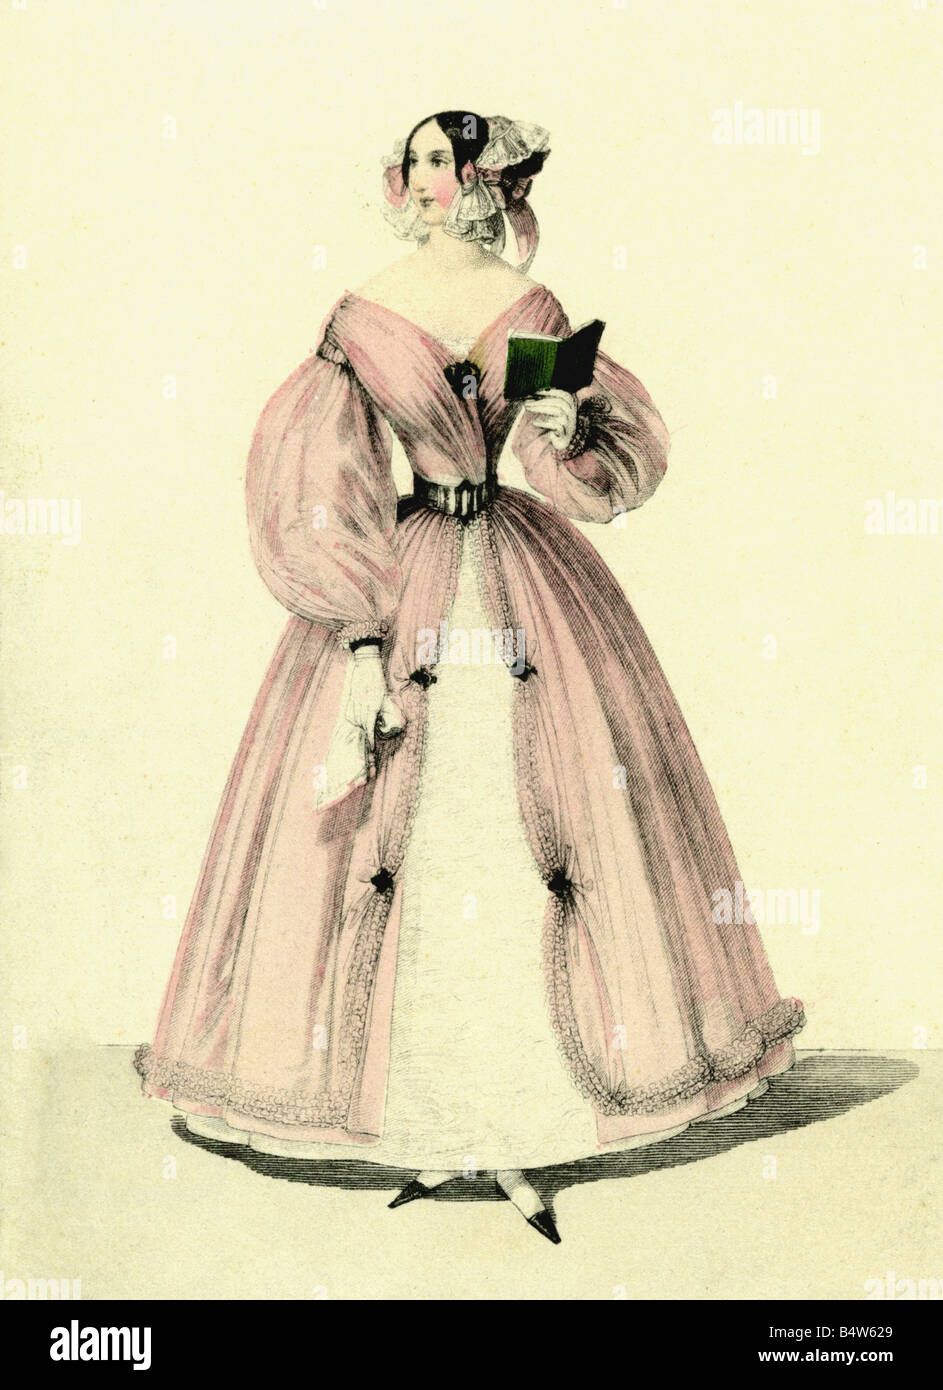 Mode, 19. Jahrhundert, Damenmode, Österreich, lithograph, Wien, 1840  Stockfotografie - Alamy